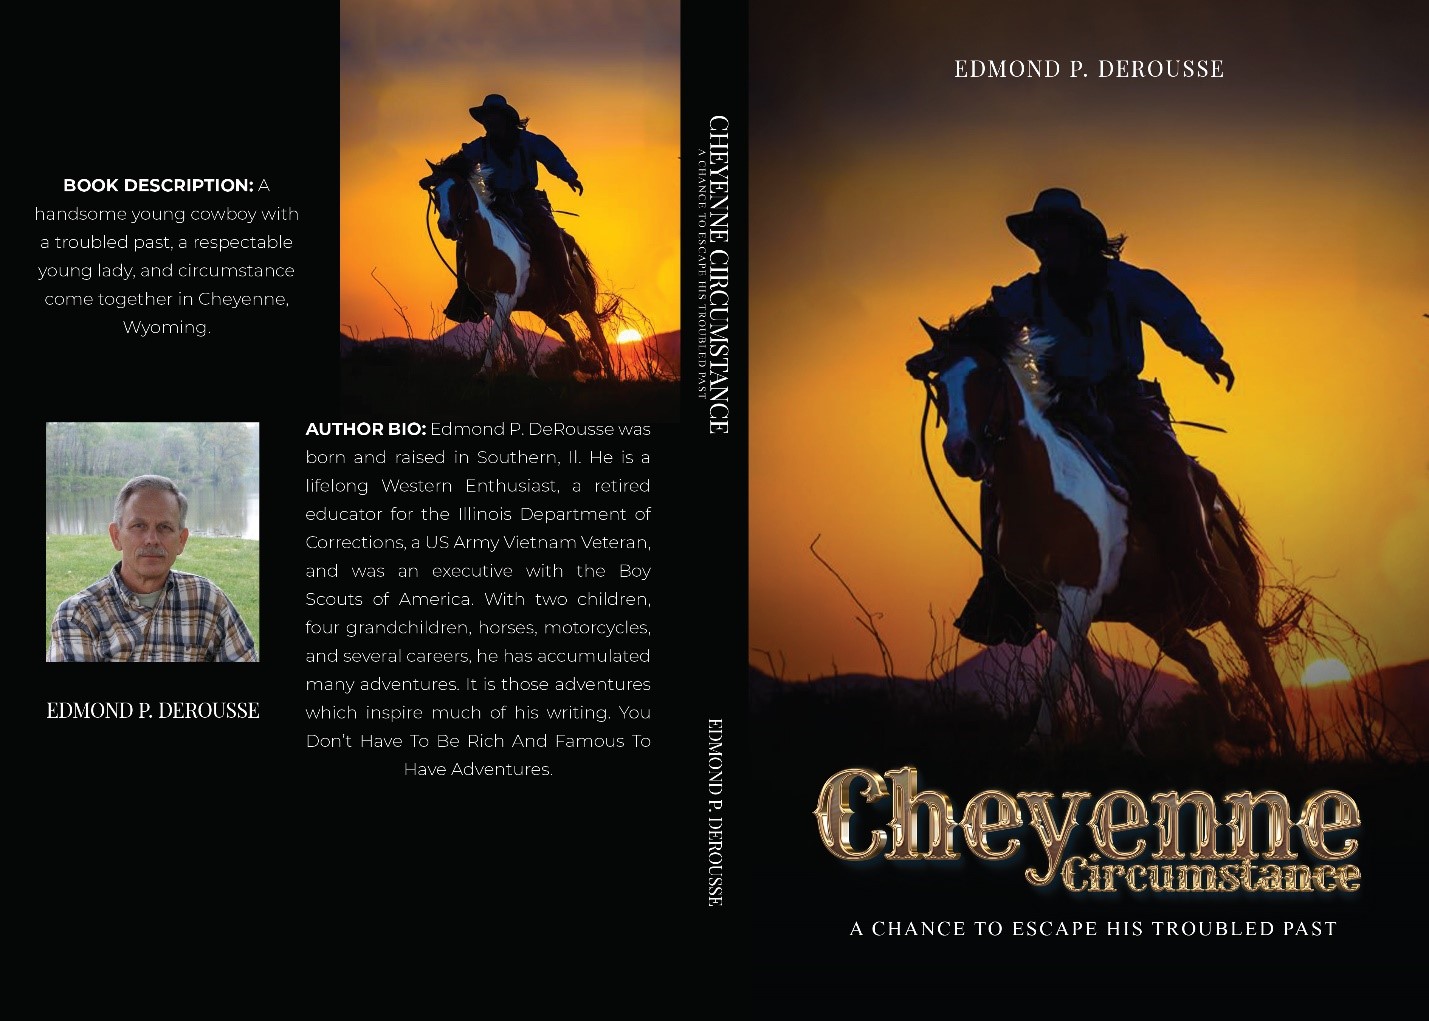 Western Romance Novel Sheds New Light on Historical Fiction - "Cheyenne Circumstance" by Edmond P. DeRousse